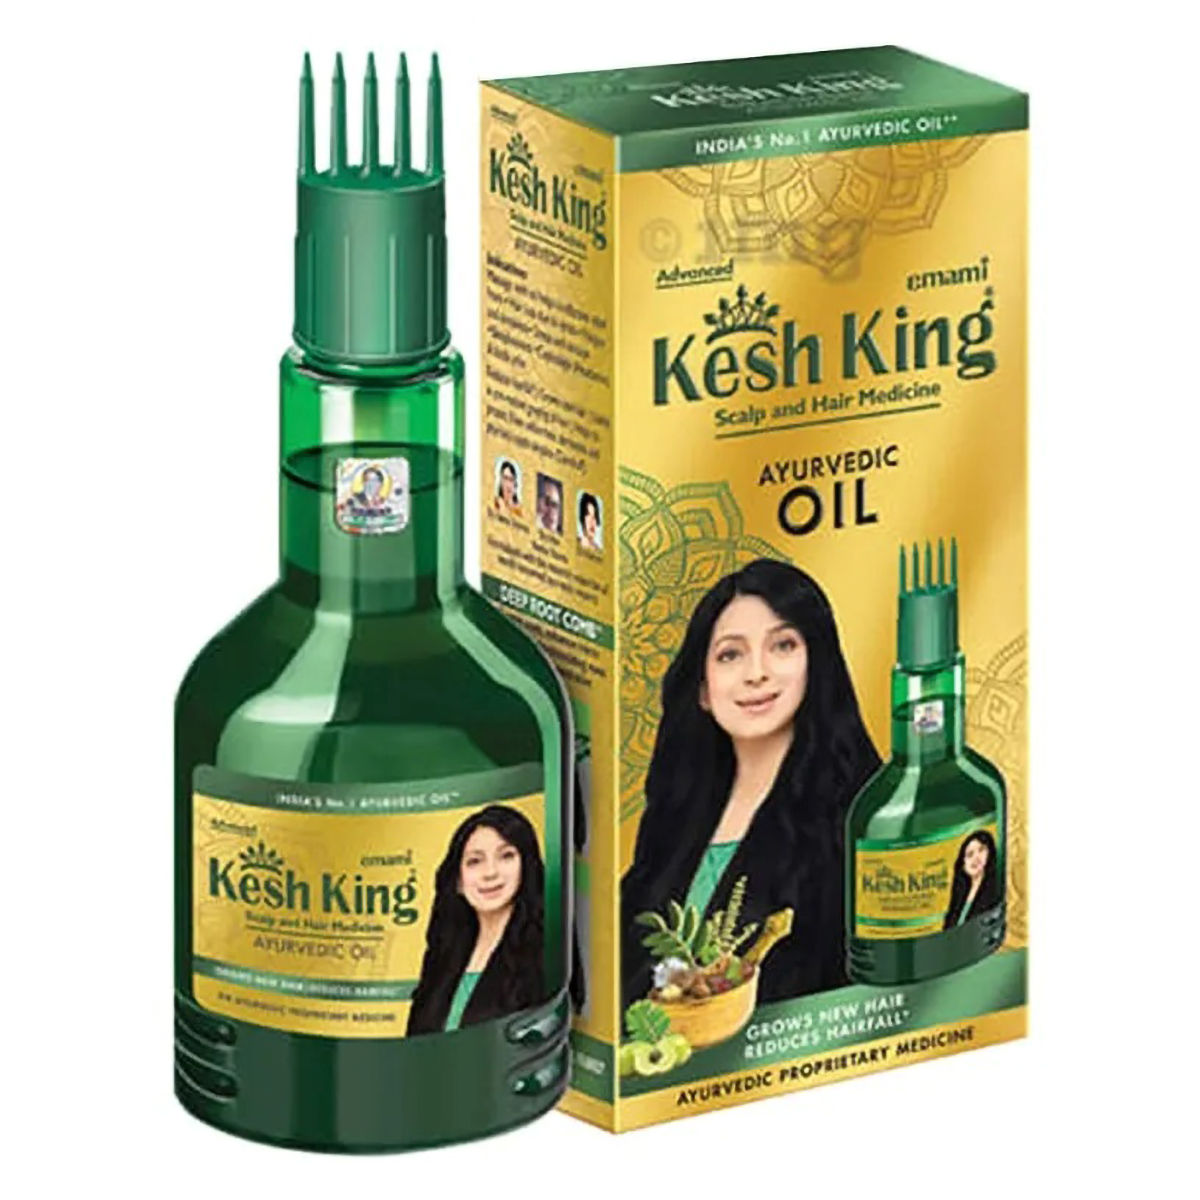 Buy Kesh King Ayurvedic Scalp and Hair Medicine Ayurvedic Oil, 100 ml Online